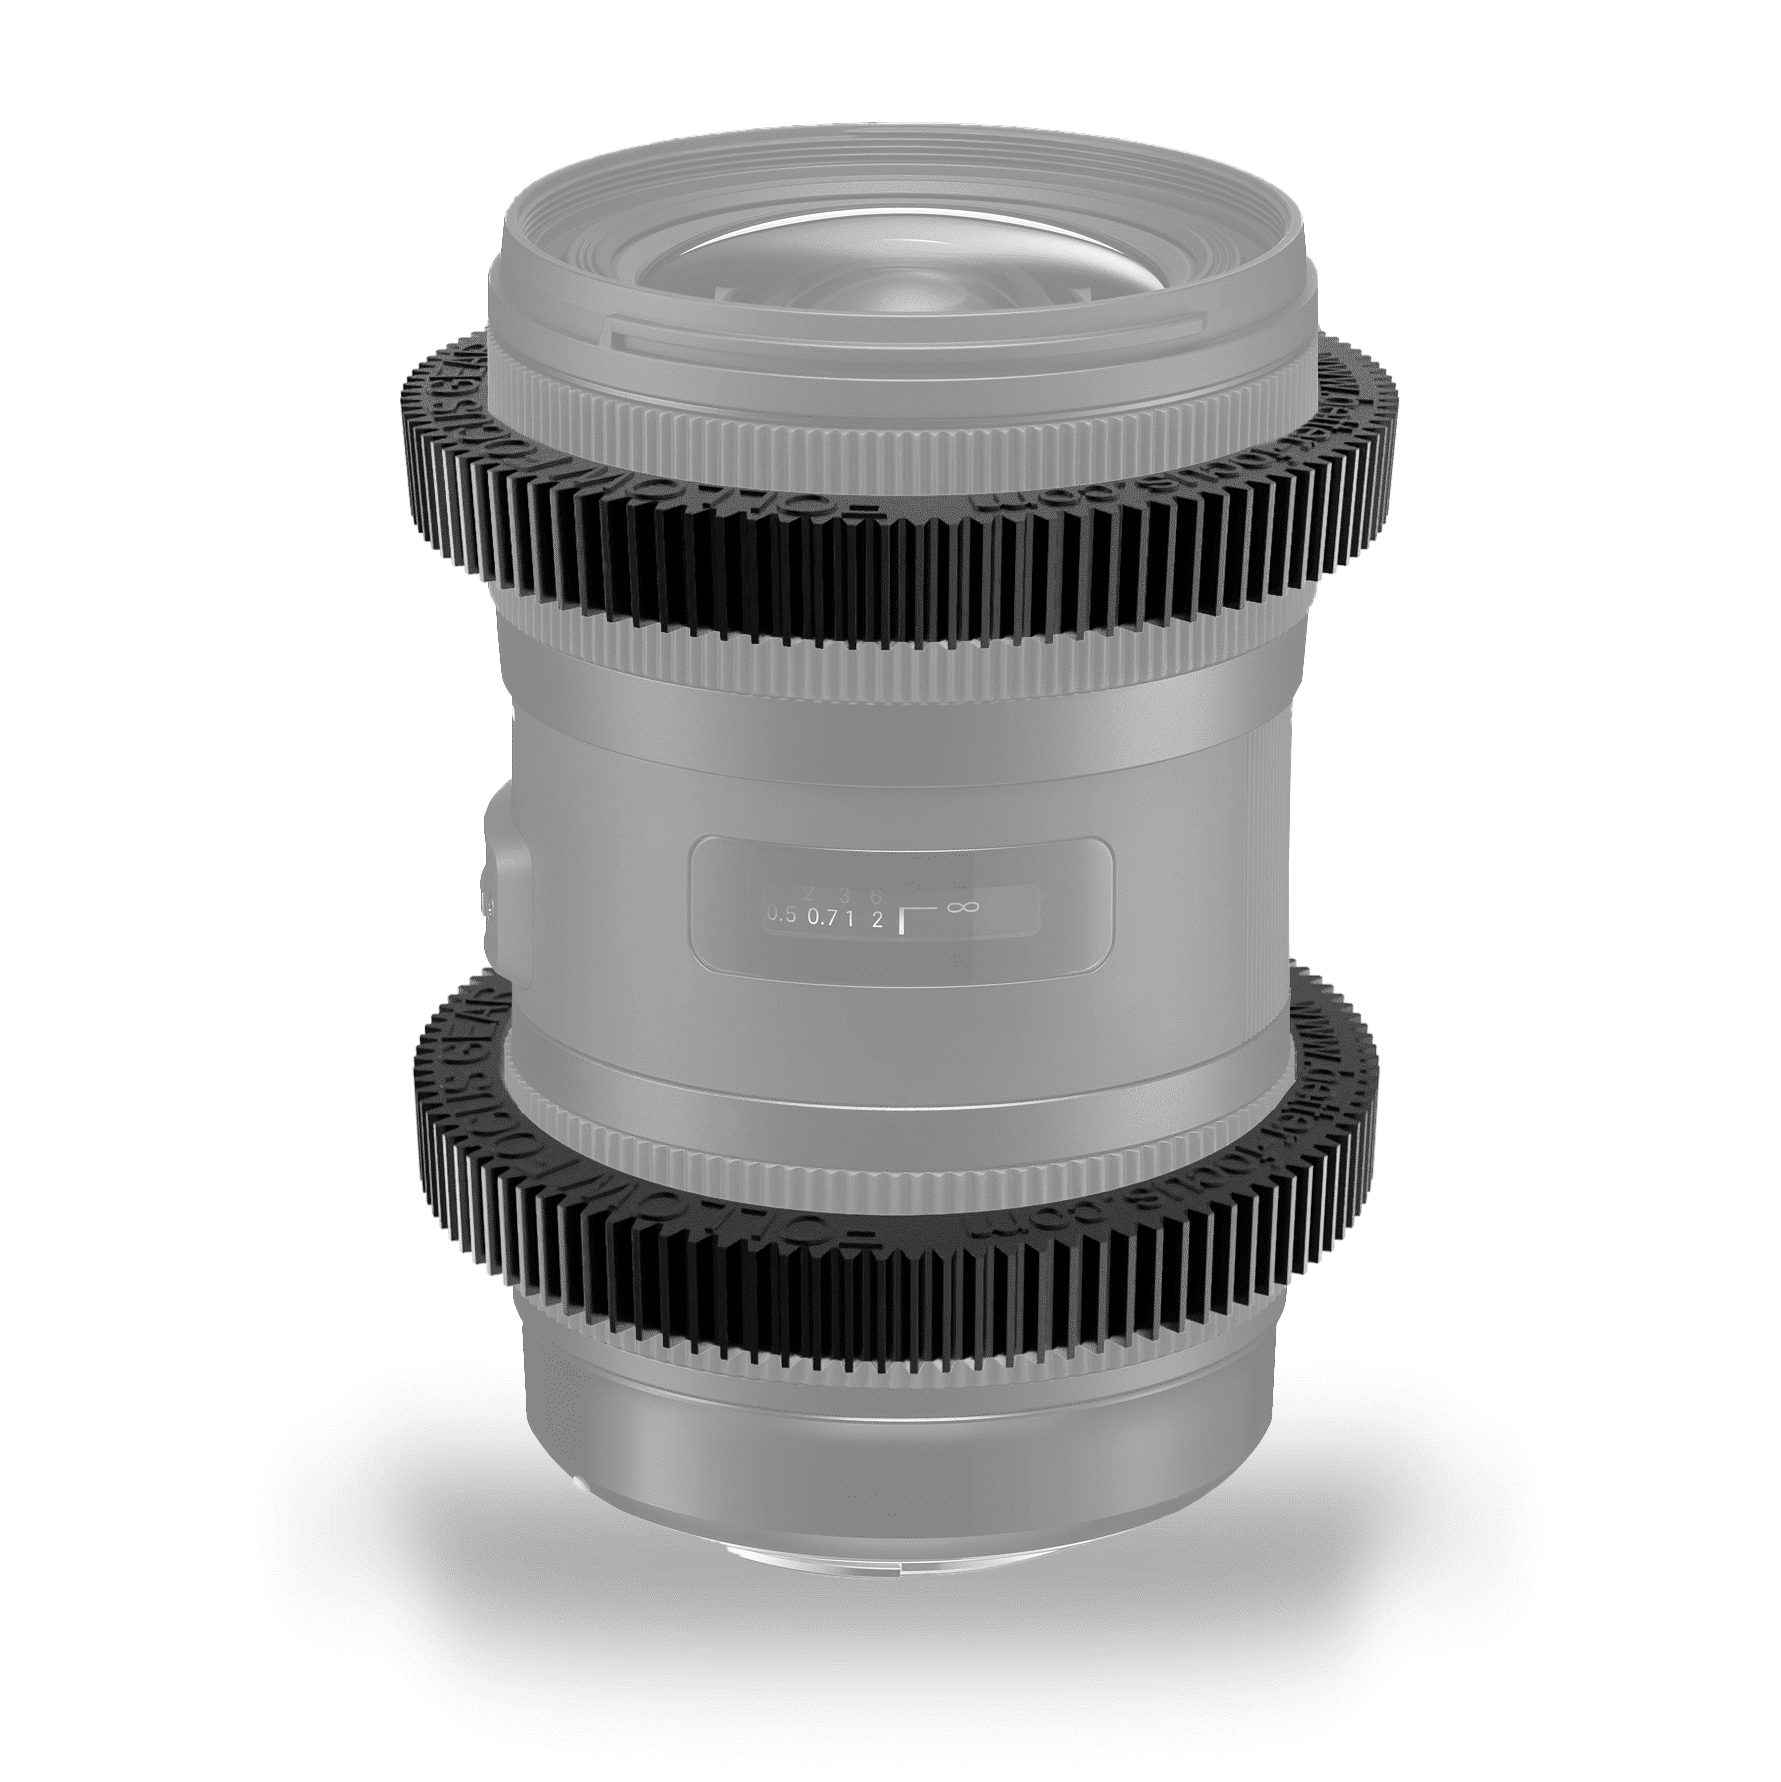 Follow Focus Ring for Tamron 24-70mm F2.8 G2 lens